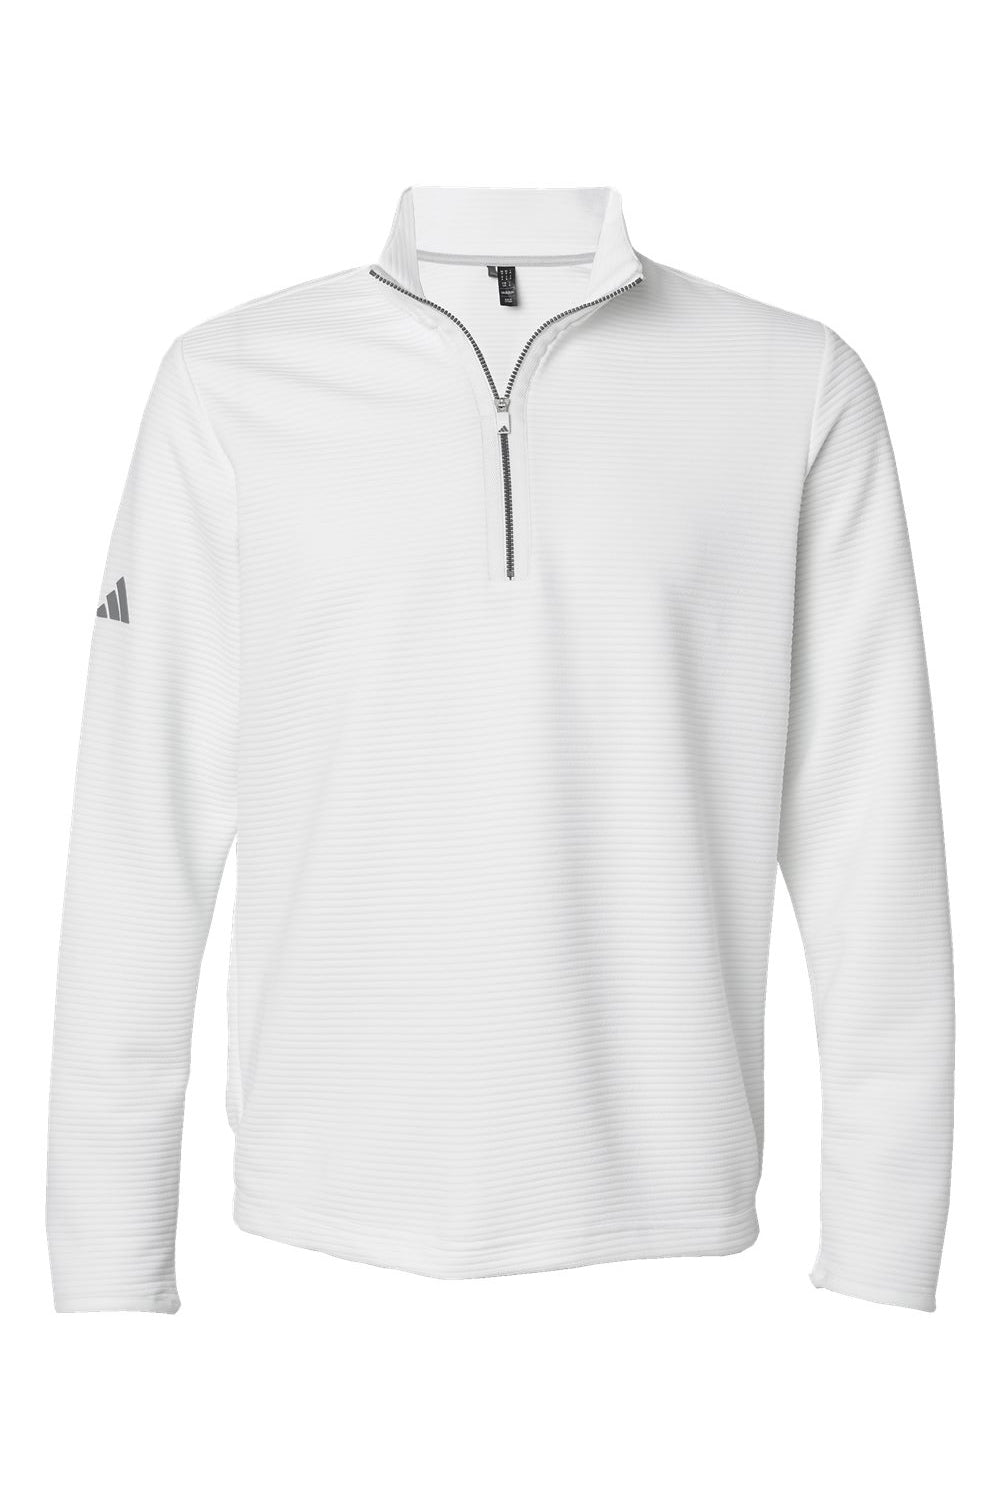 Adidas A588 Mens Spacer 1/4 Zip Sweatshirt Core White Flat Front